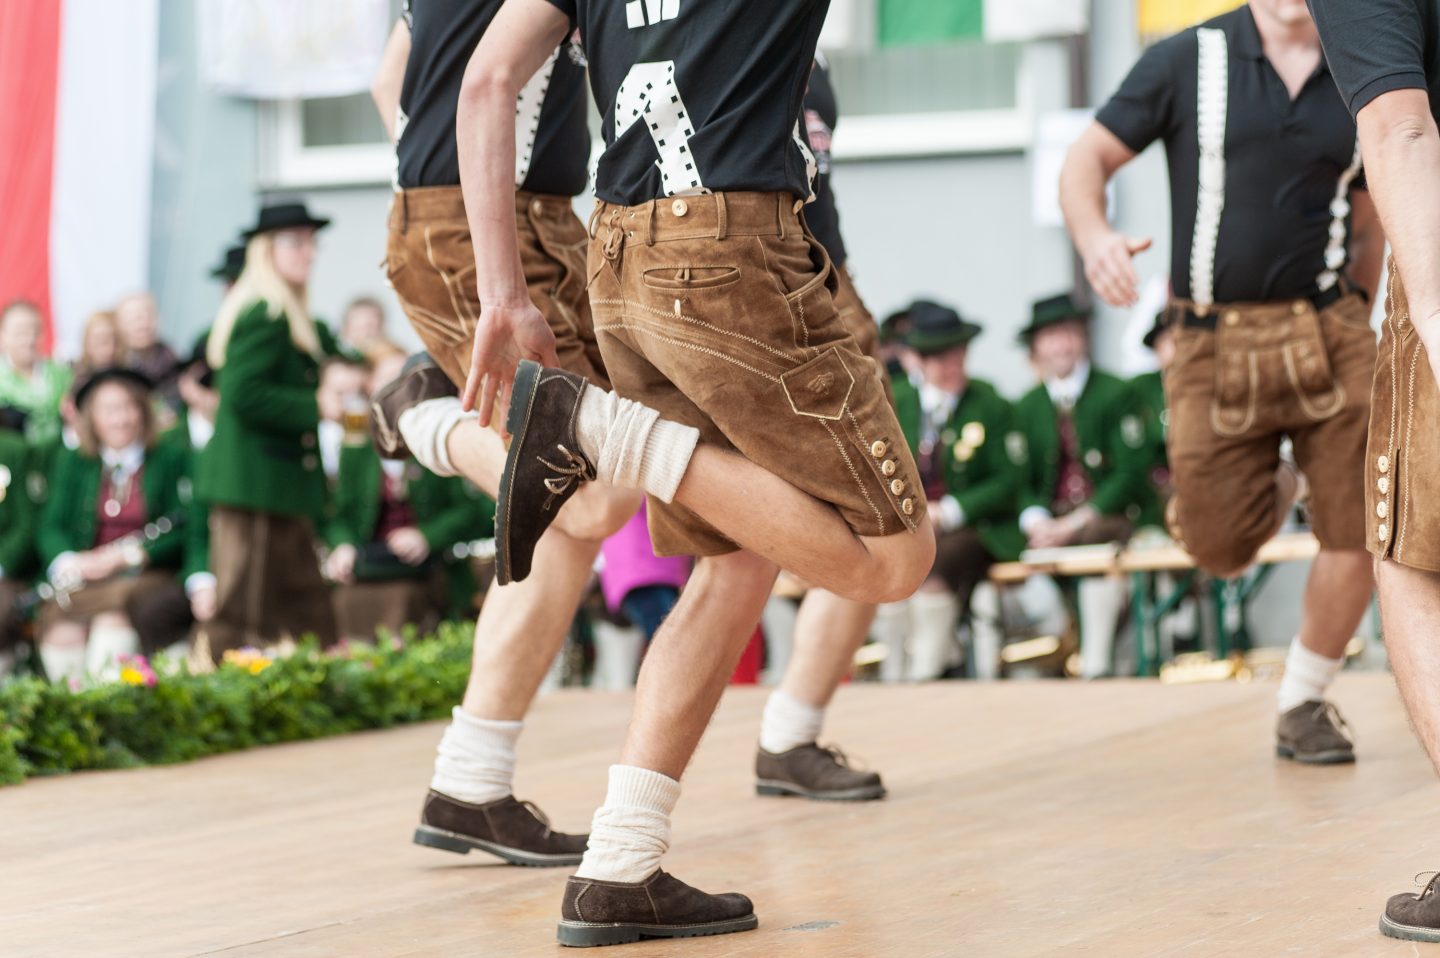 Austrian folk dancing is mostly associated with Schuhplattler, Ländler, polka and waltz